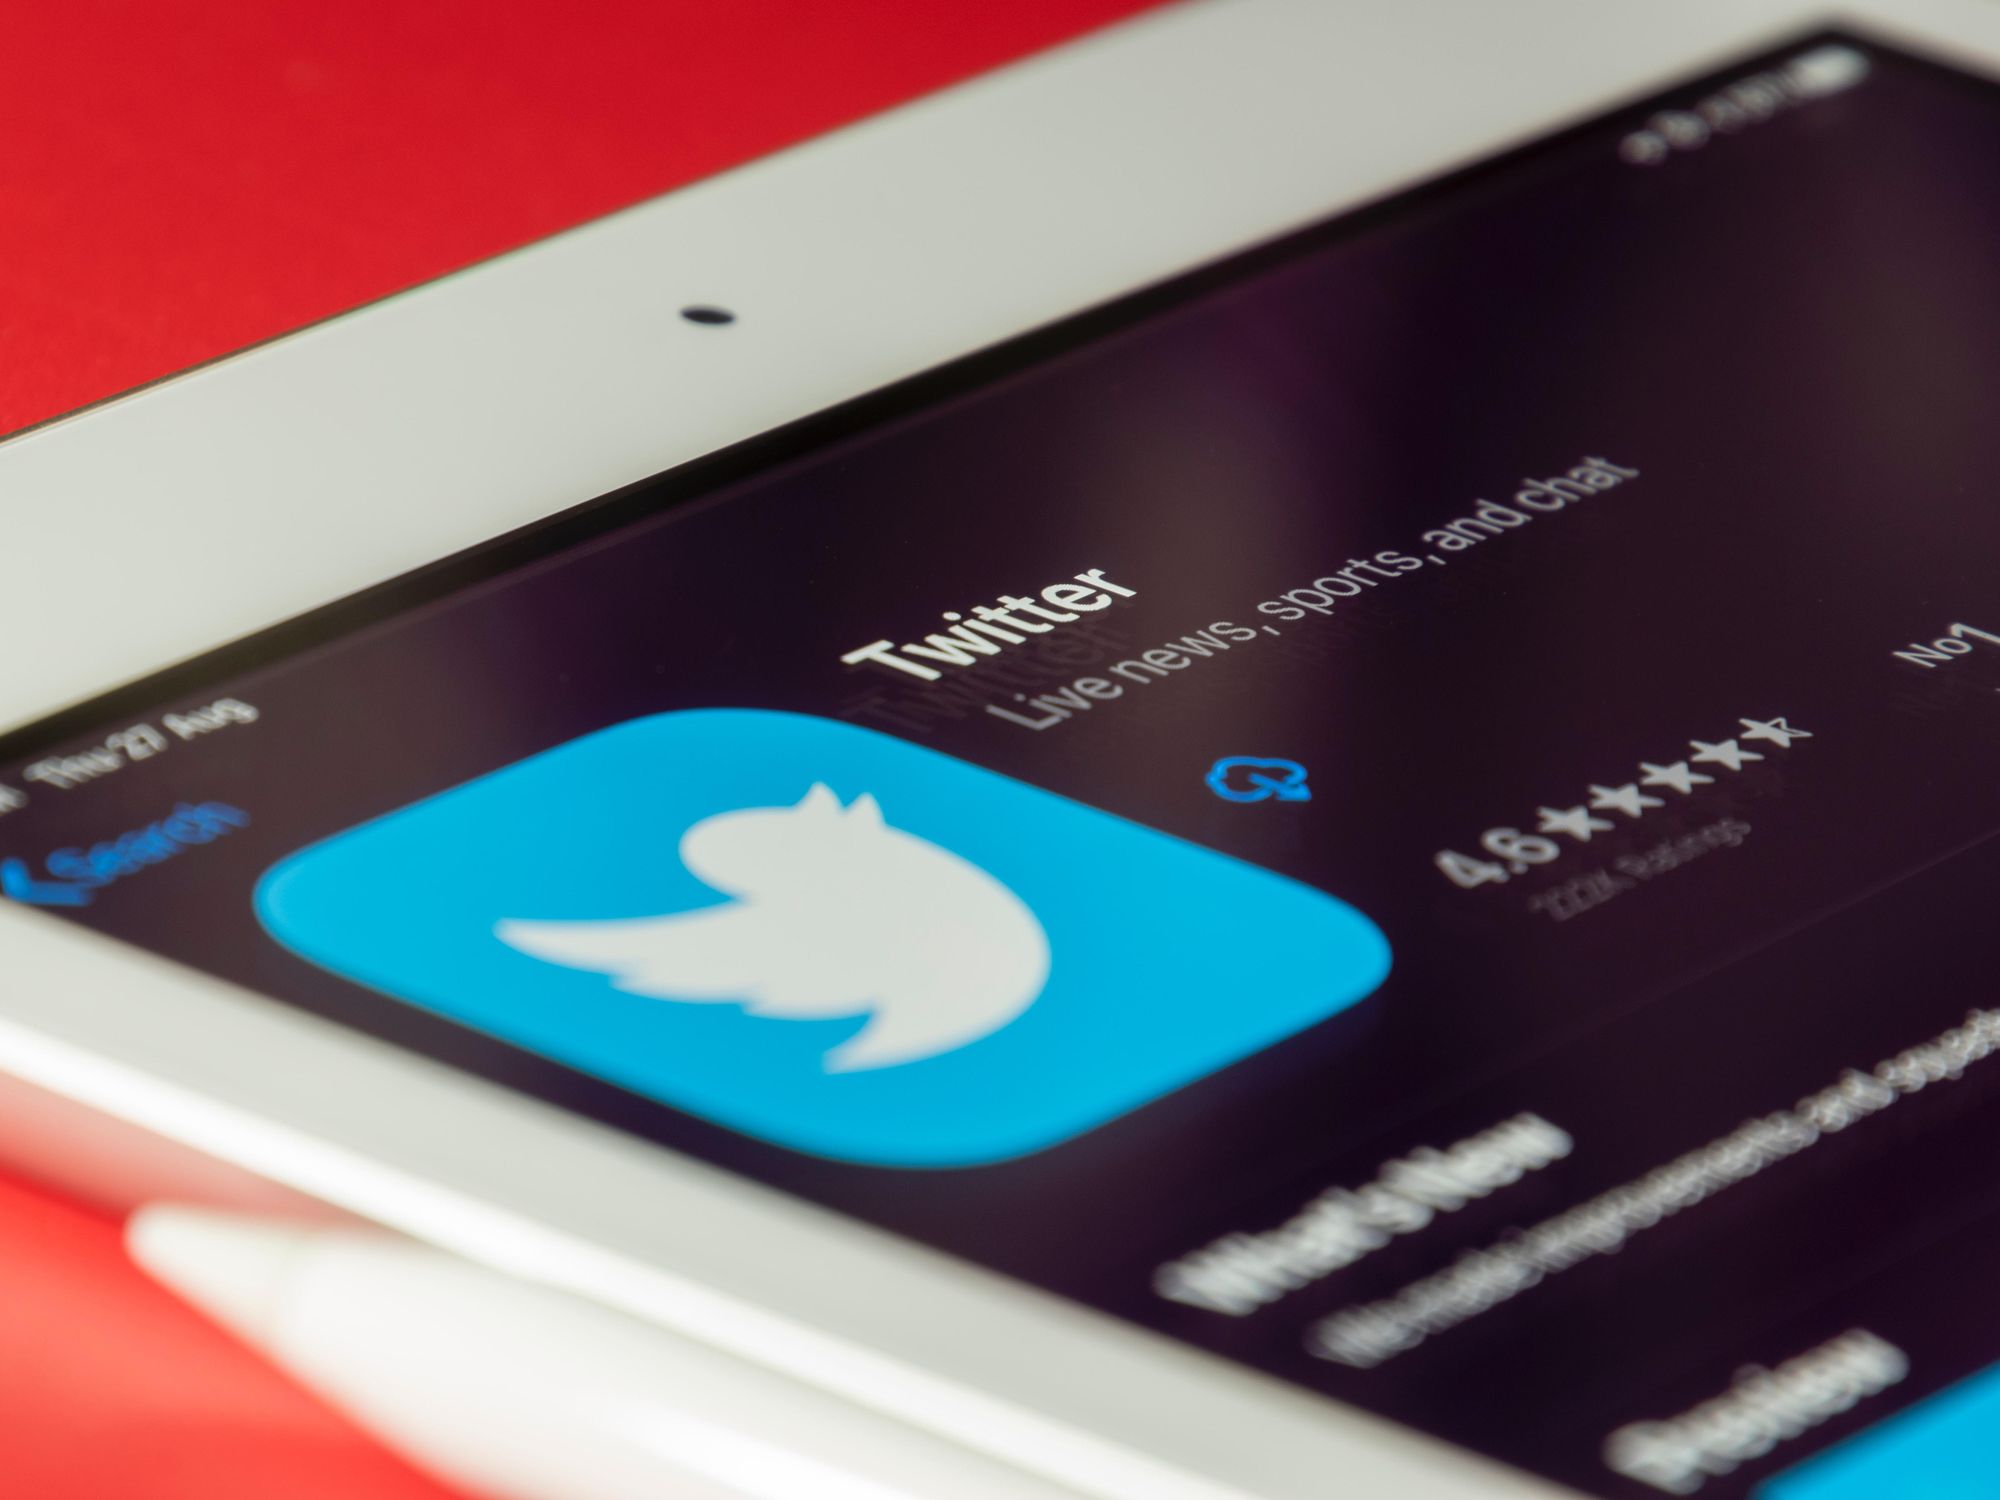 Report: Trolls Manipulated Twitter To Spread Anti-Amber Heard Content